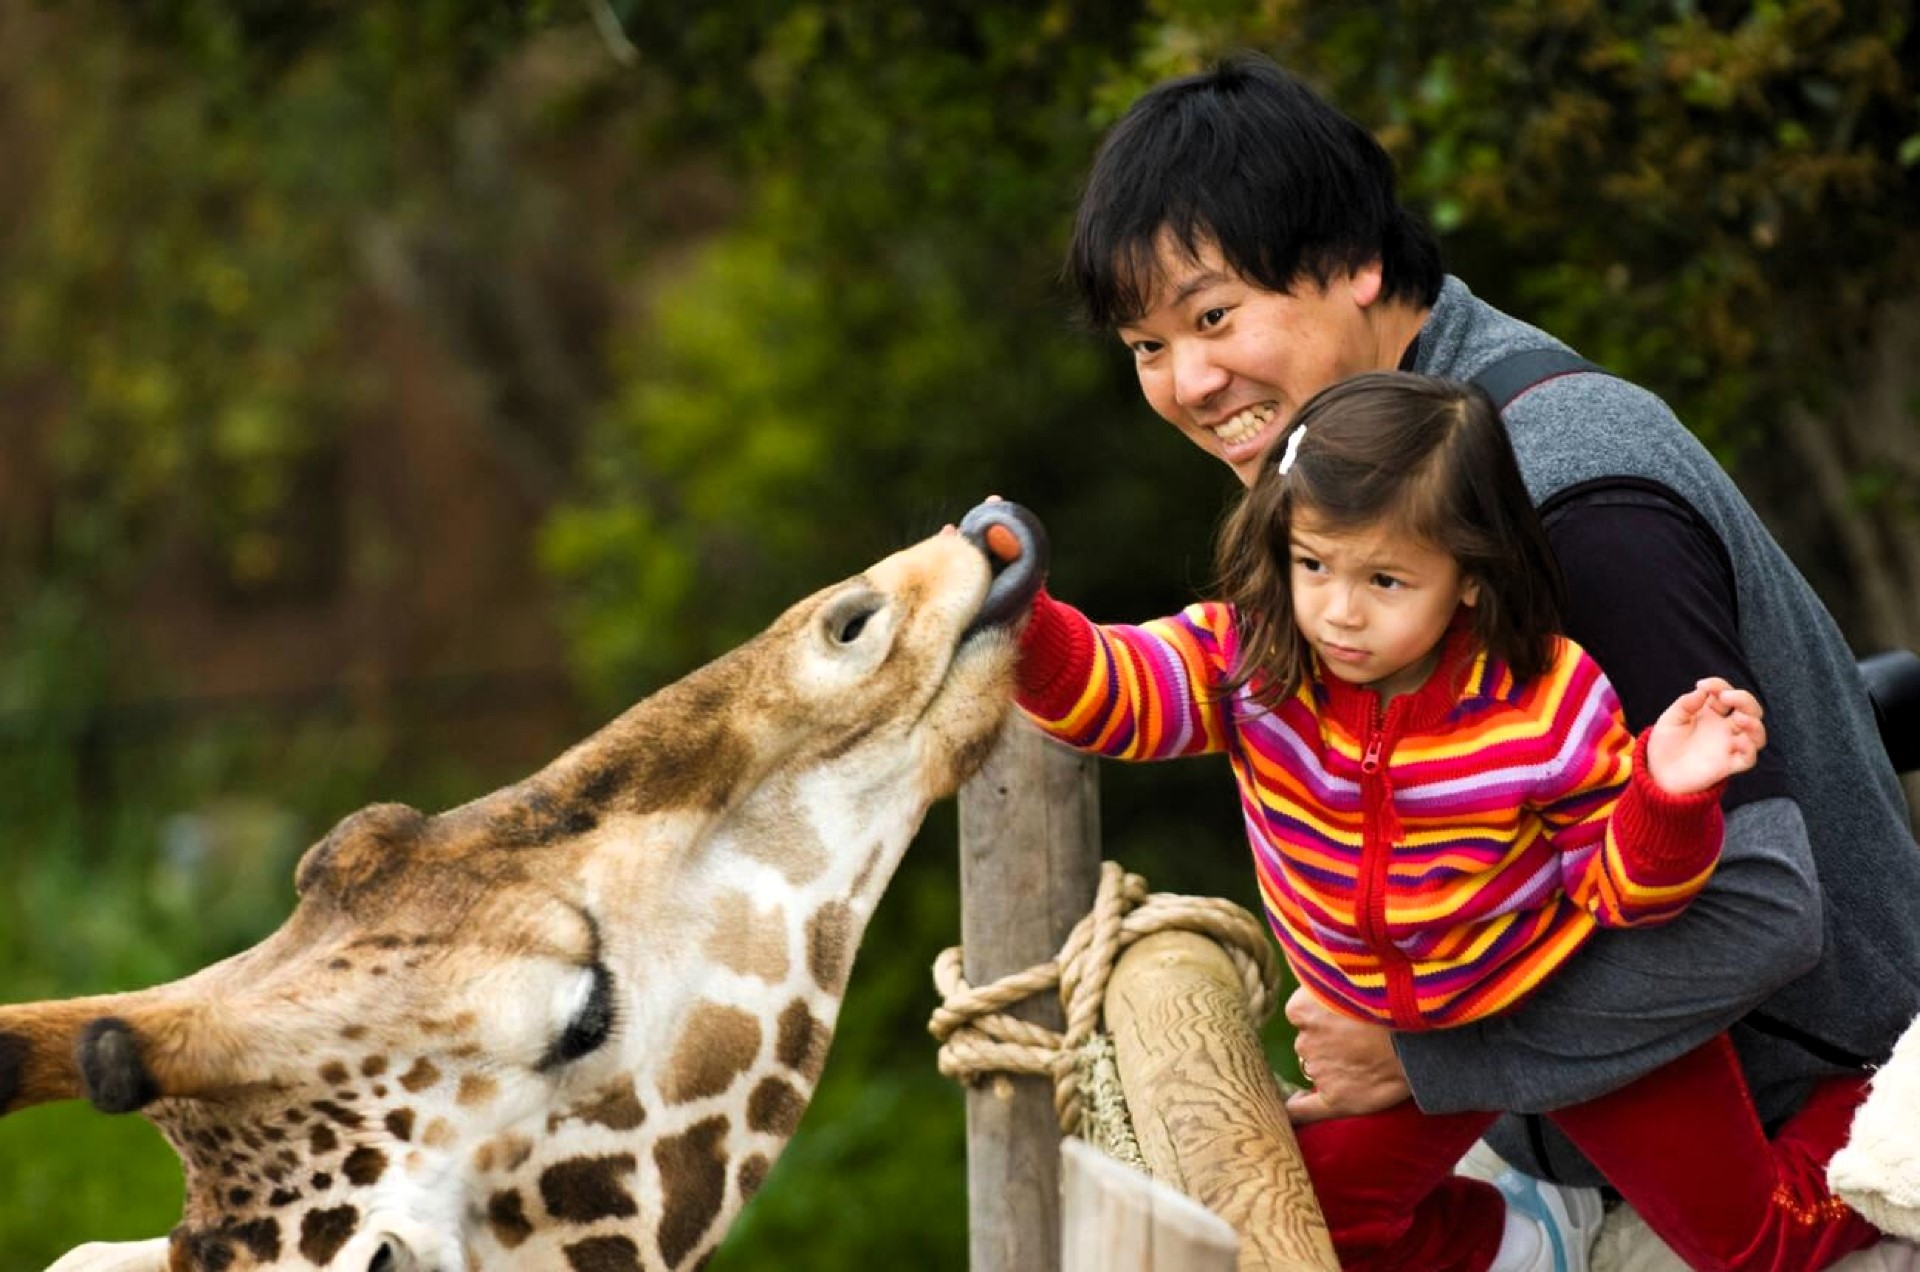 Feeding a giraffe at the Santa Barbara zoo